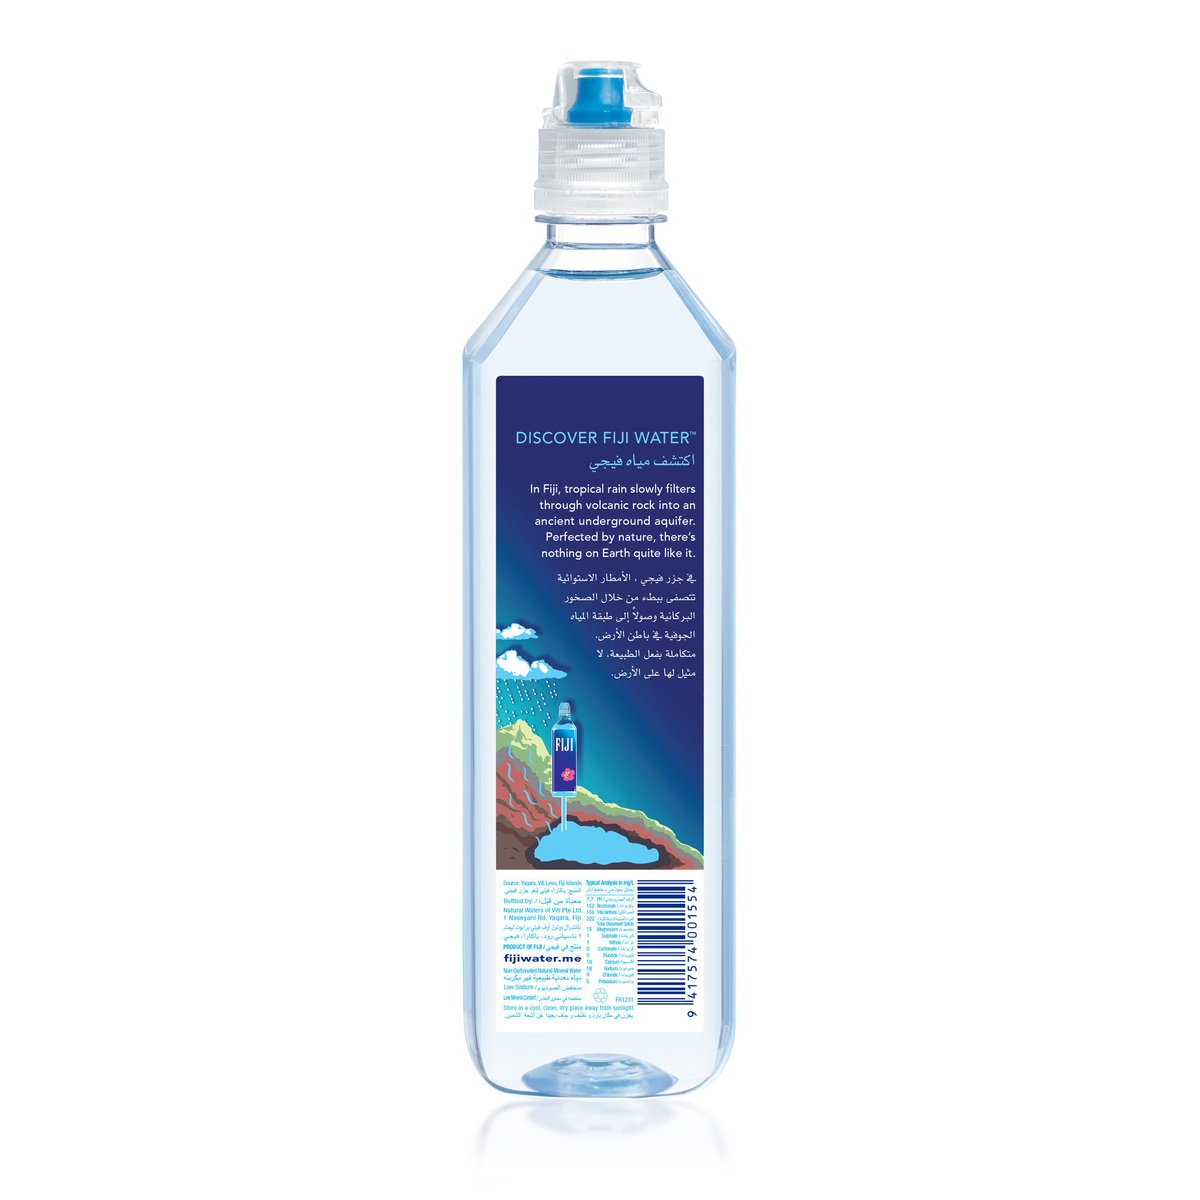 Fiji Natural Artesian Water 700 ml